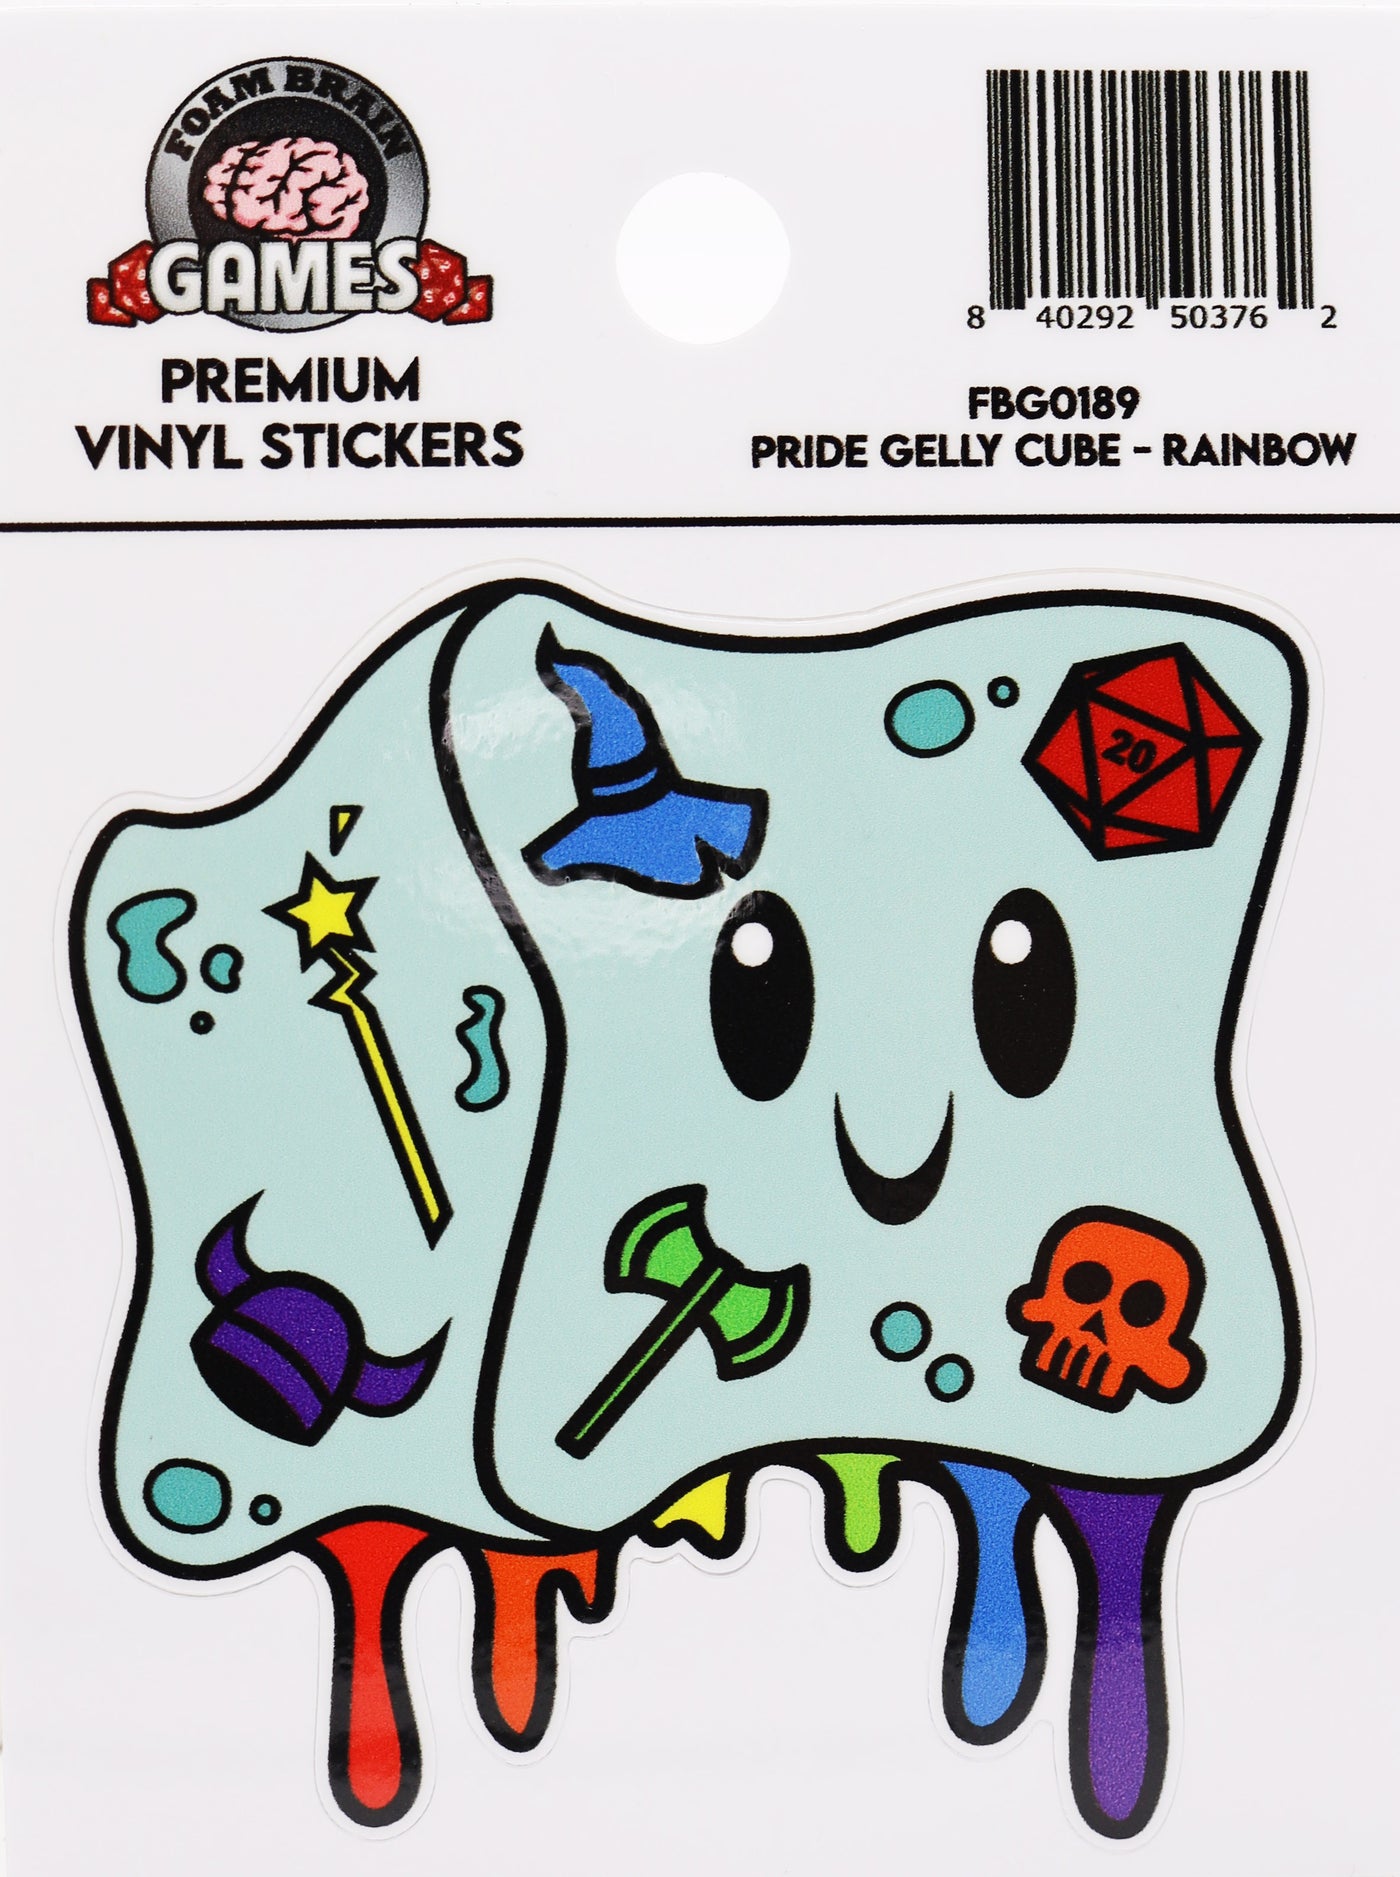 Pride Gelly Cube Sticker: Rainbow Stickers Foam Brain Games